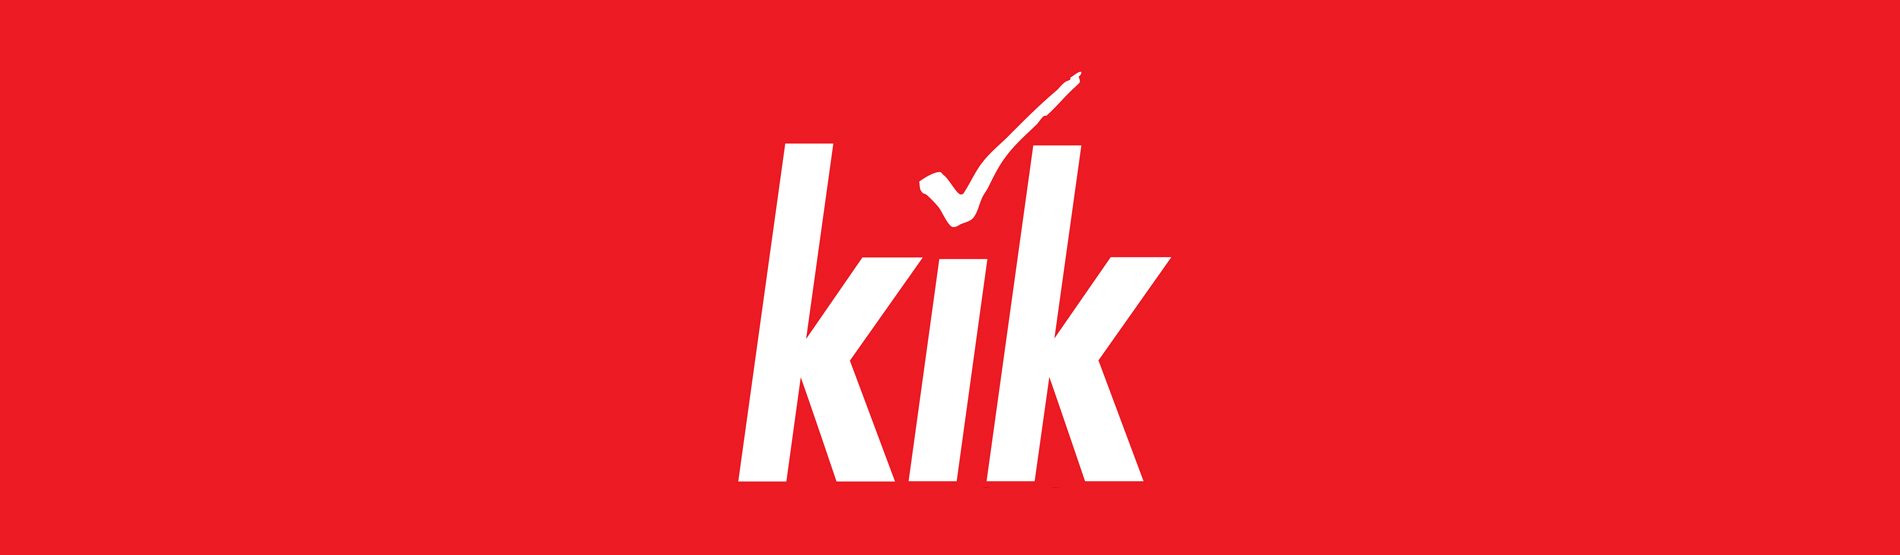 kik-1